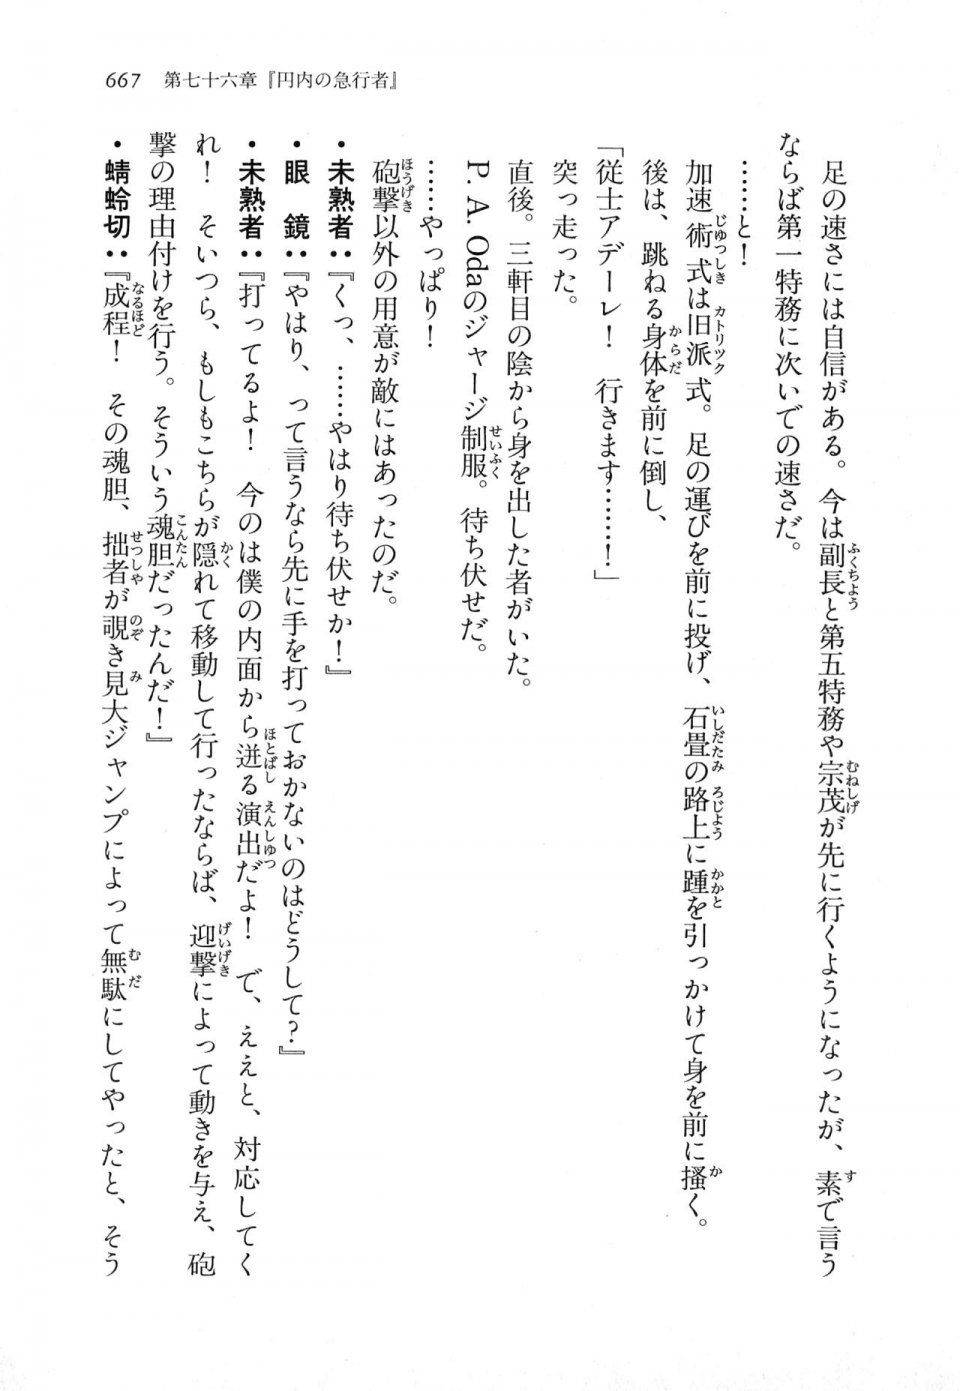 Kyoukai Senjou no Horizon LN Vol 18(7C) Part 2 - Photo #107